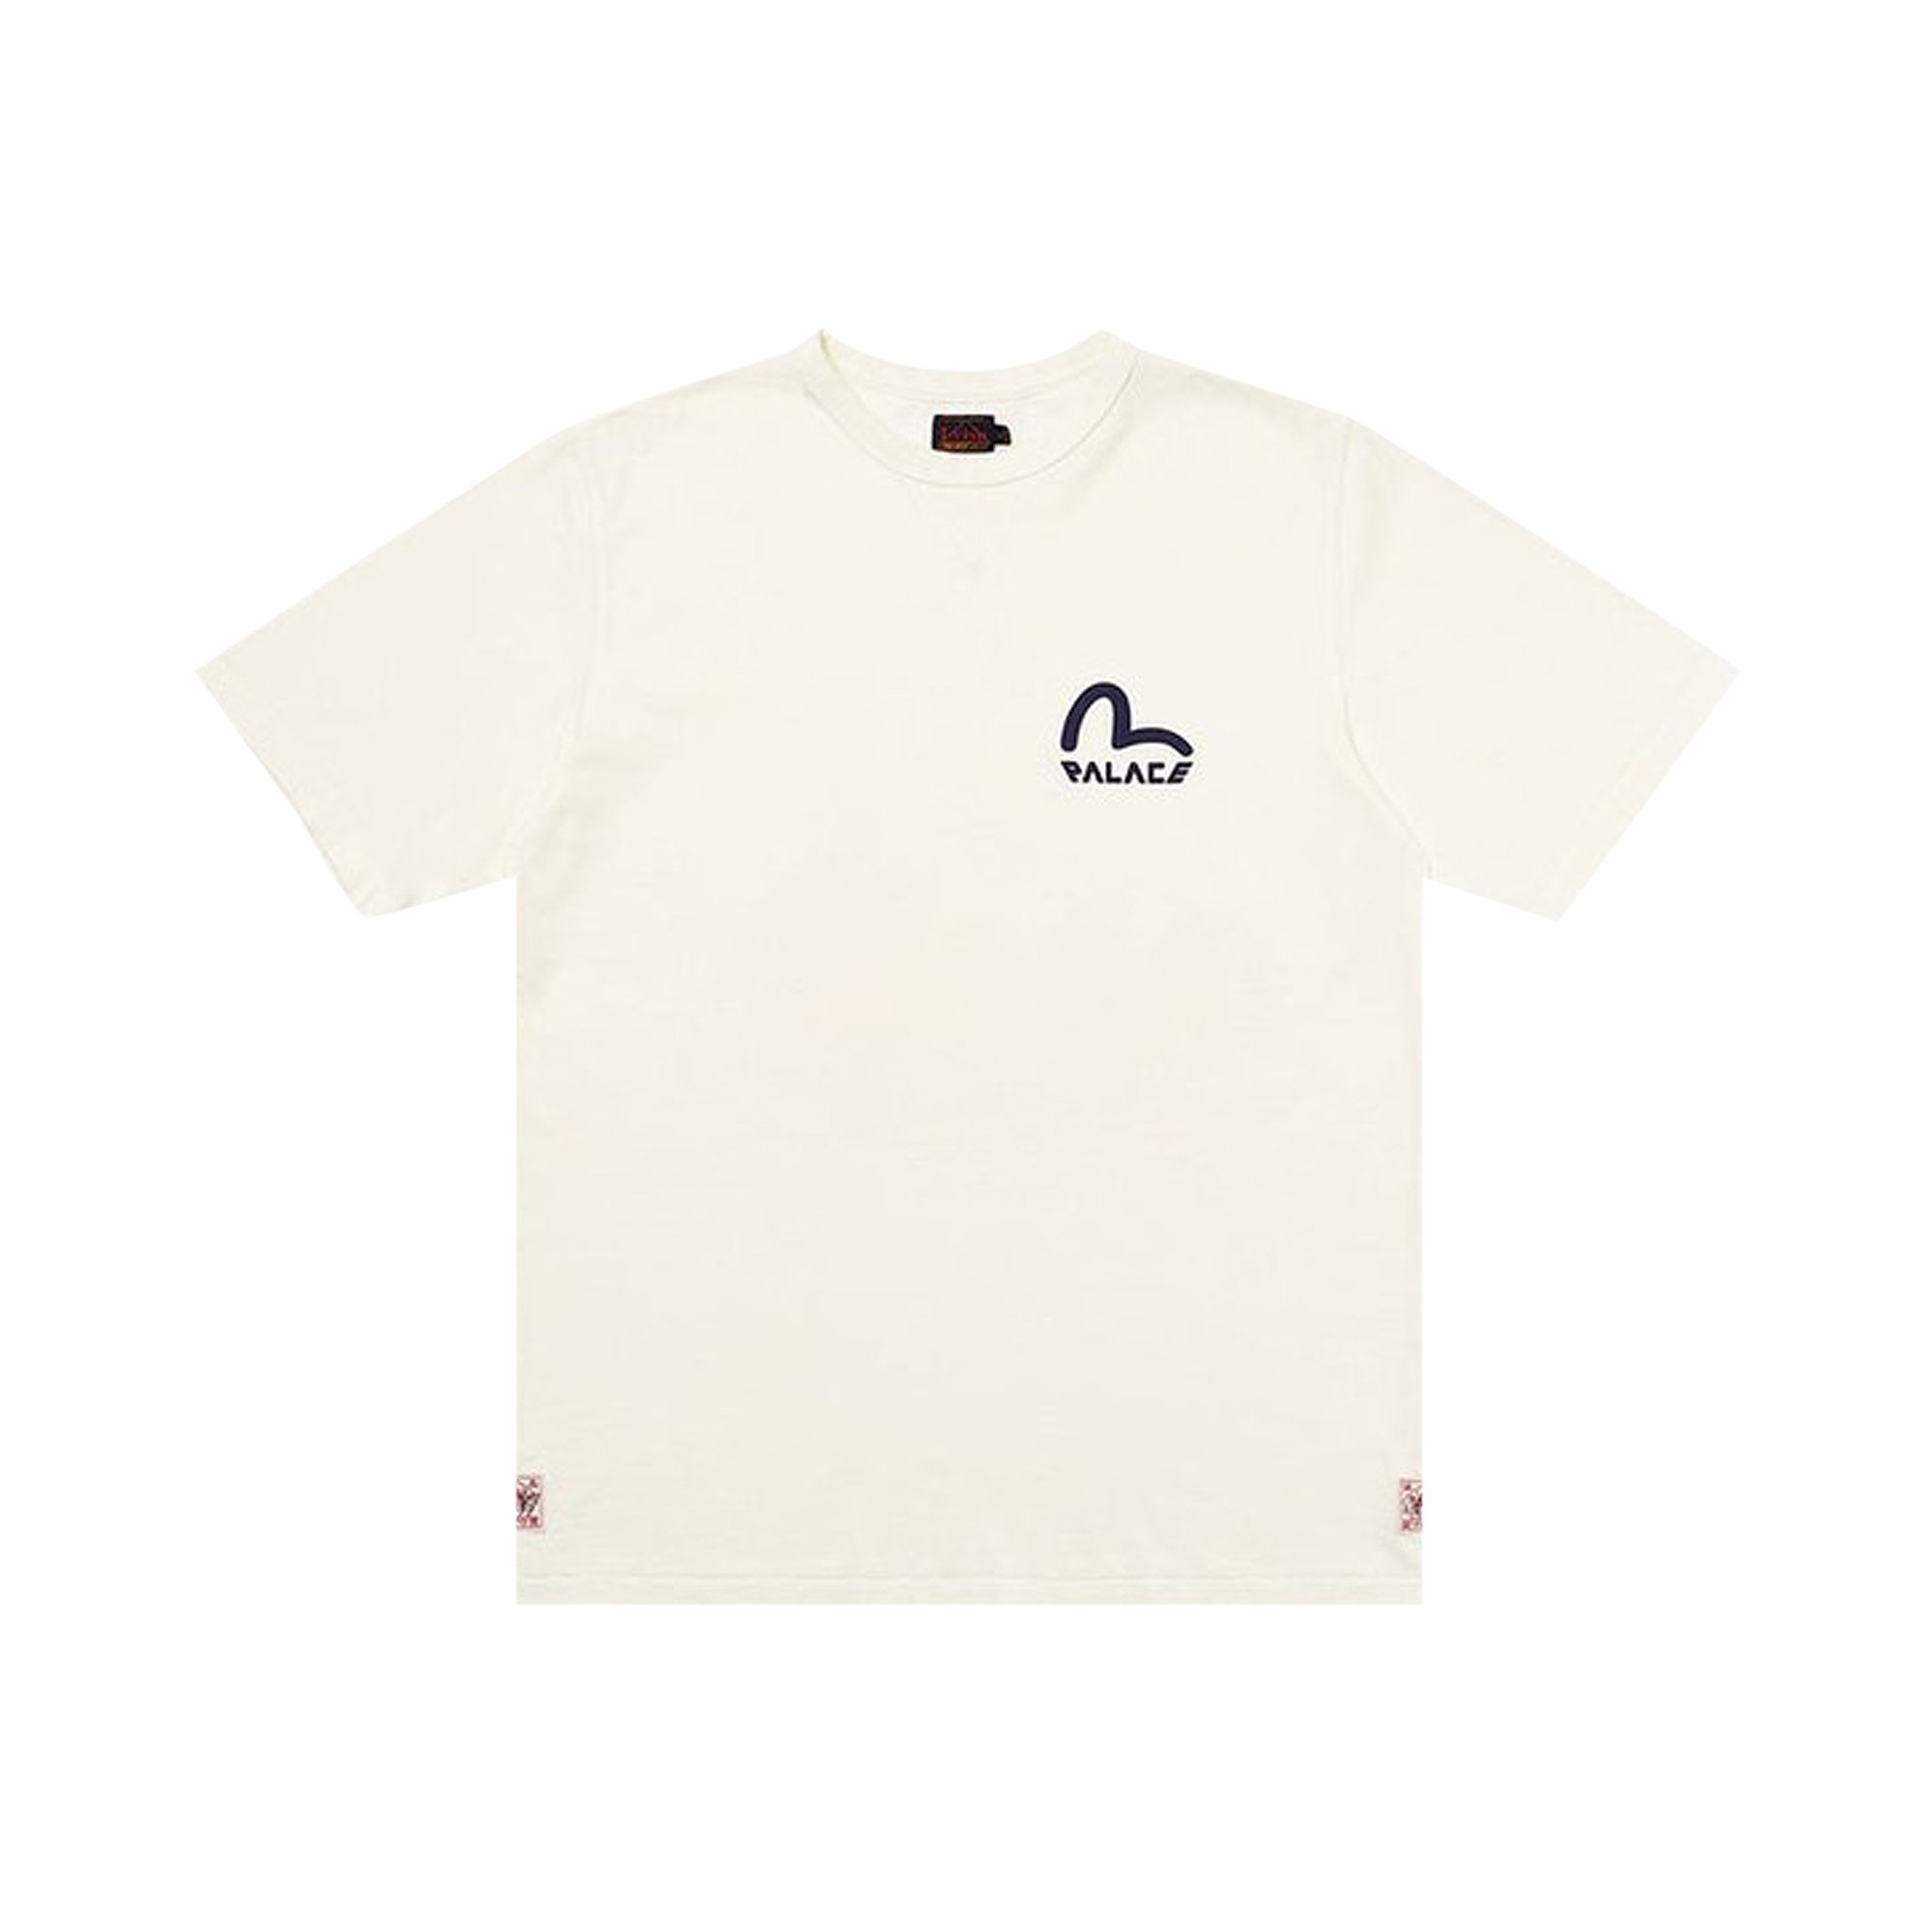 Buy Palace x Evisu T-Shirt 'White' - P17EV010 | GOAT